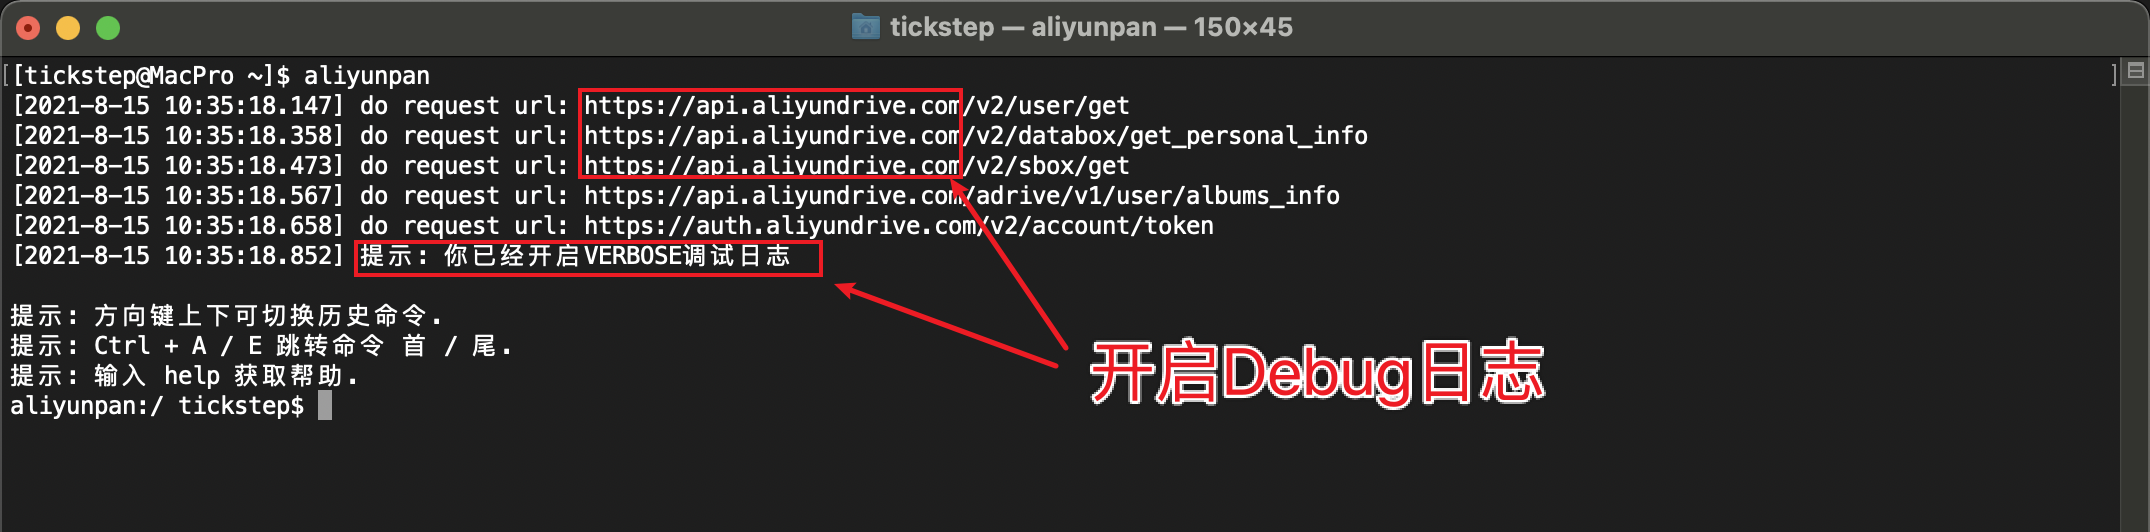 debug-log-screenshot.png